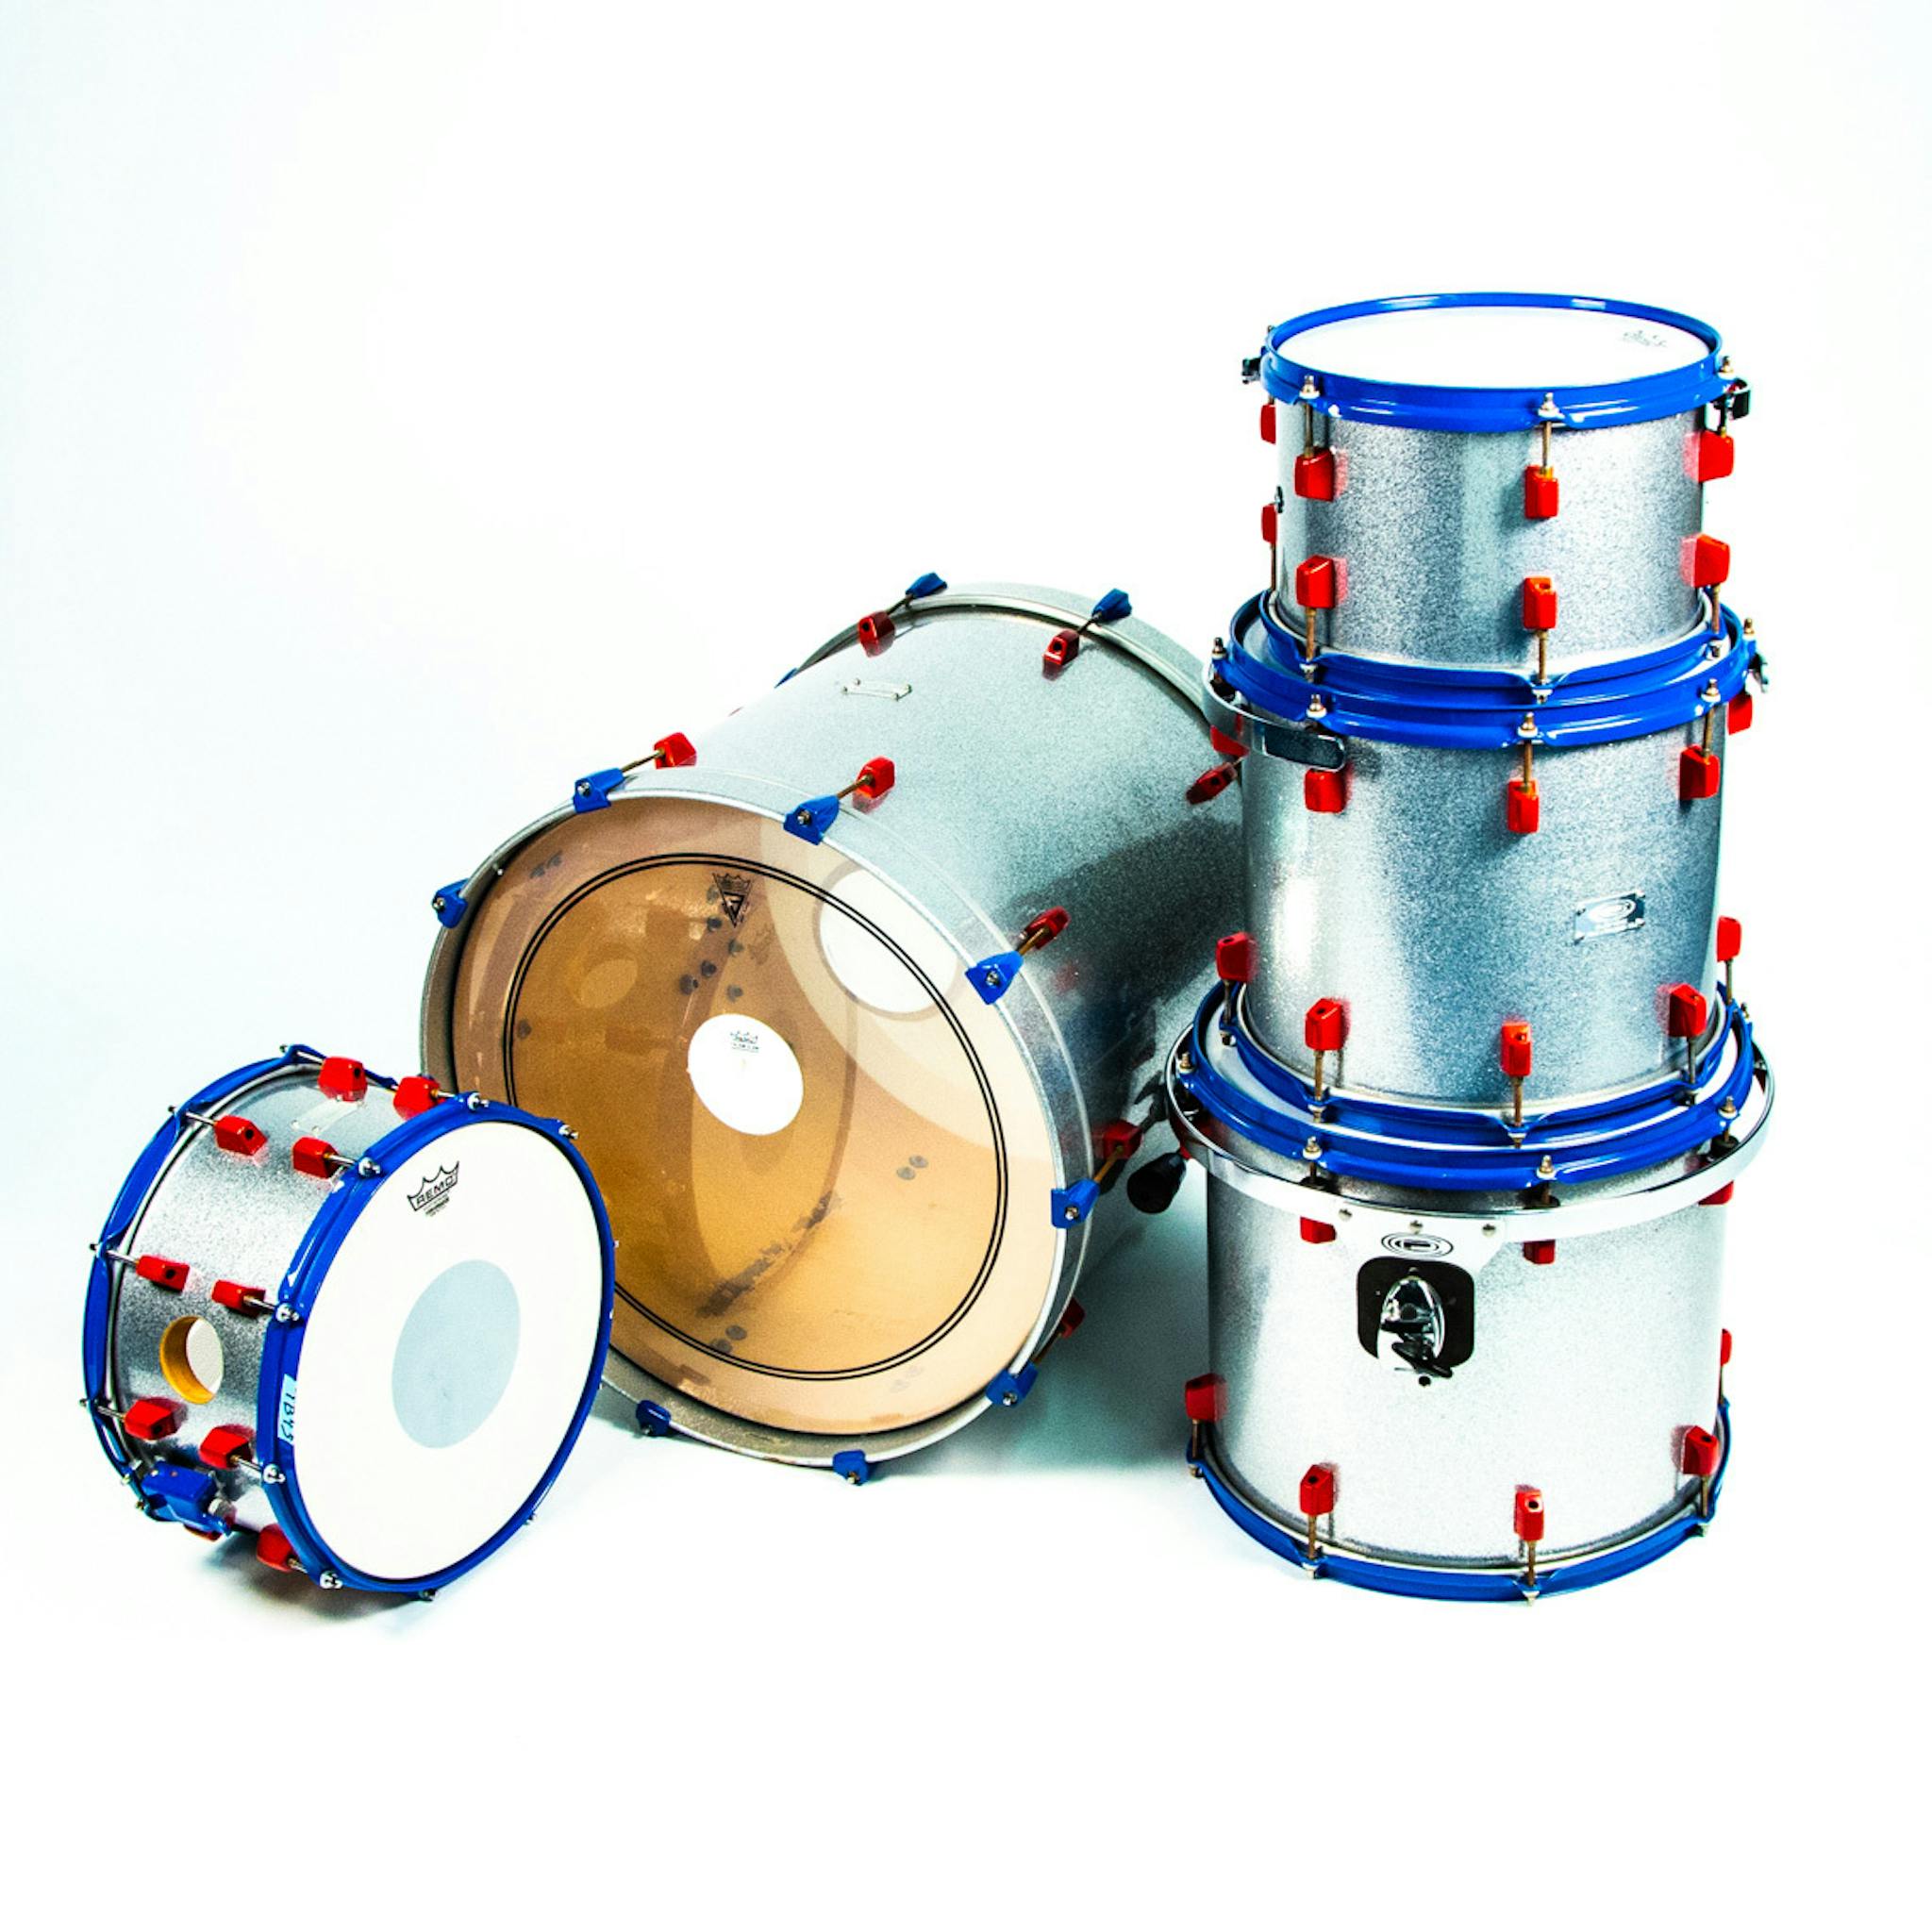 Travis Barker Adams Song drum kit